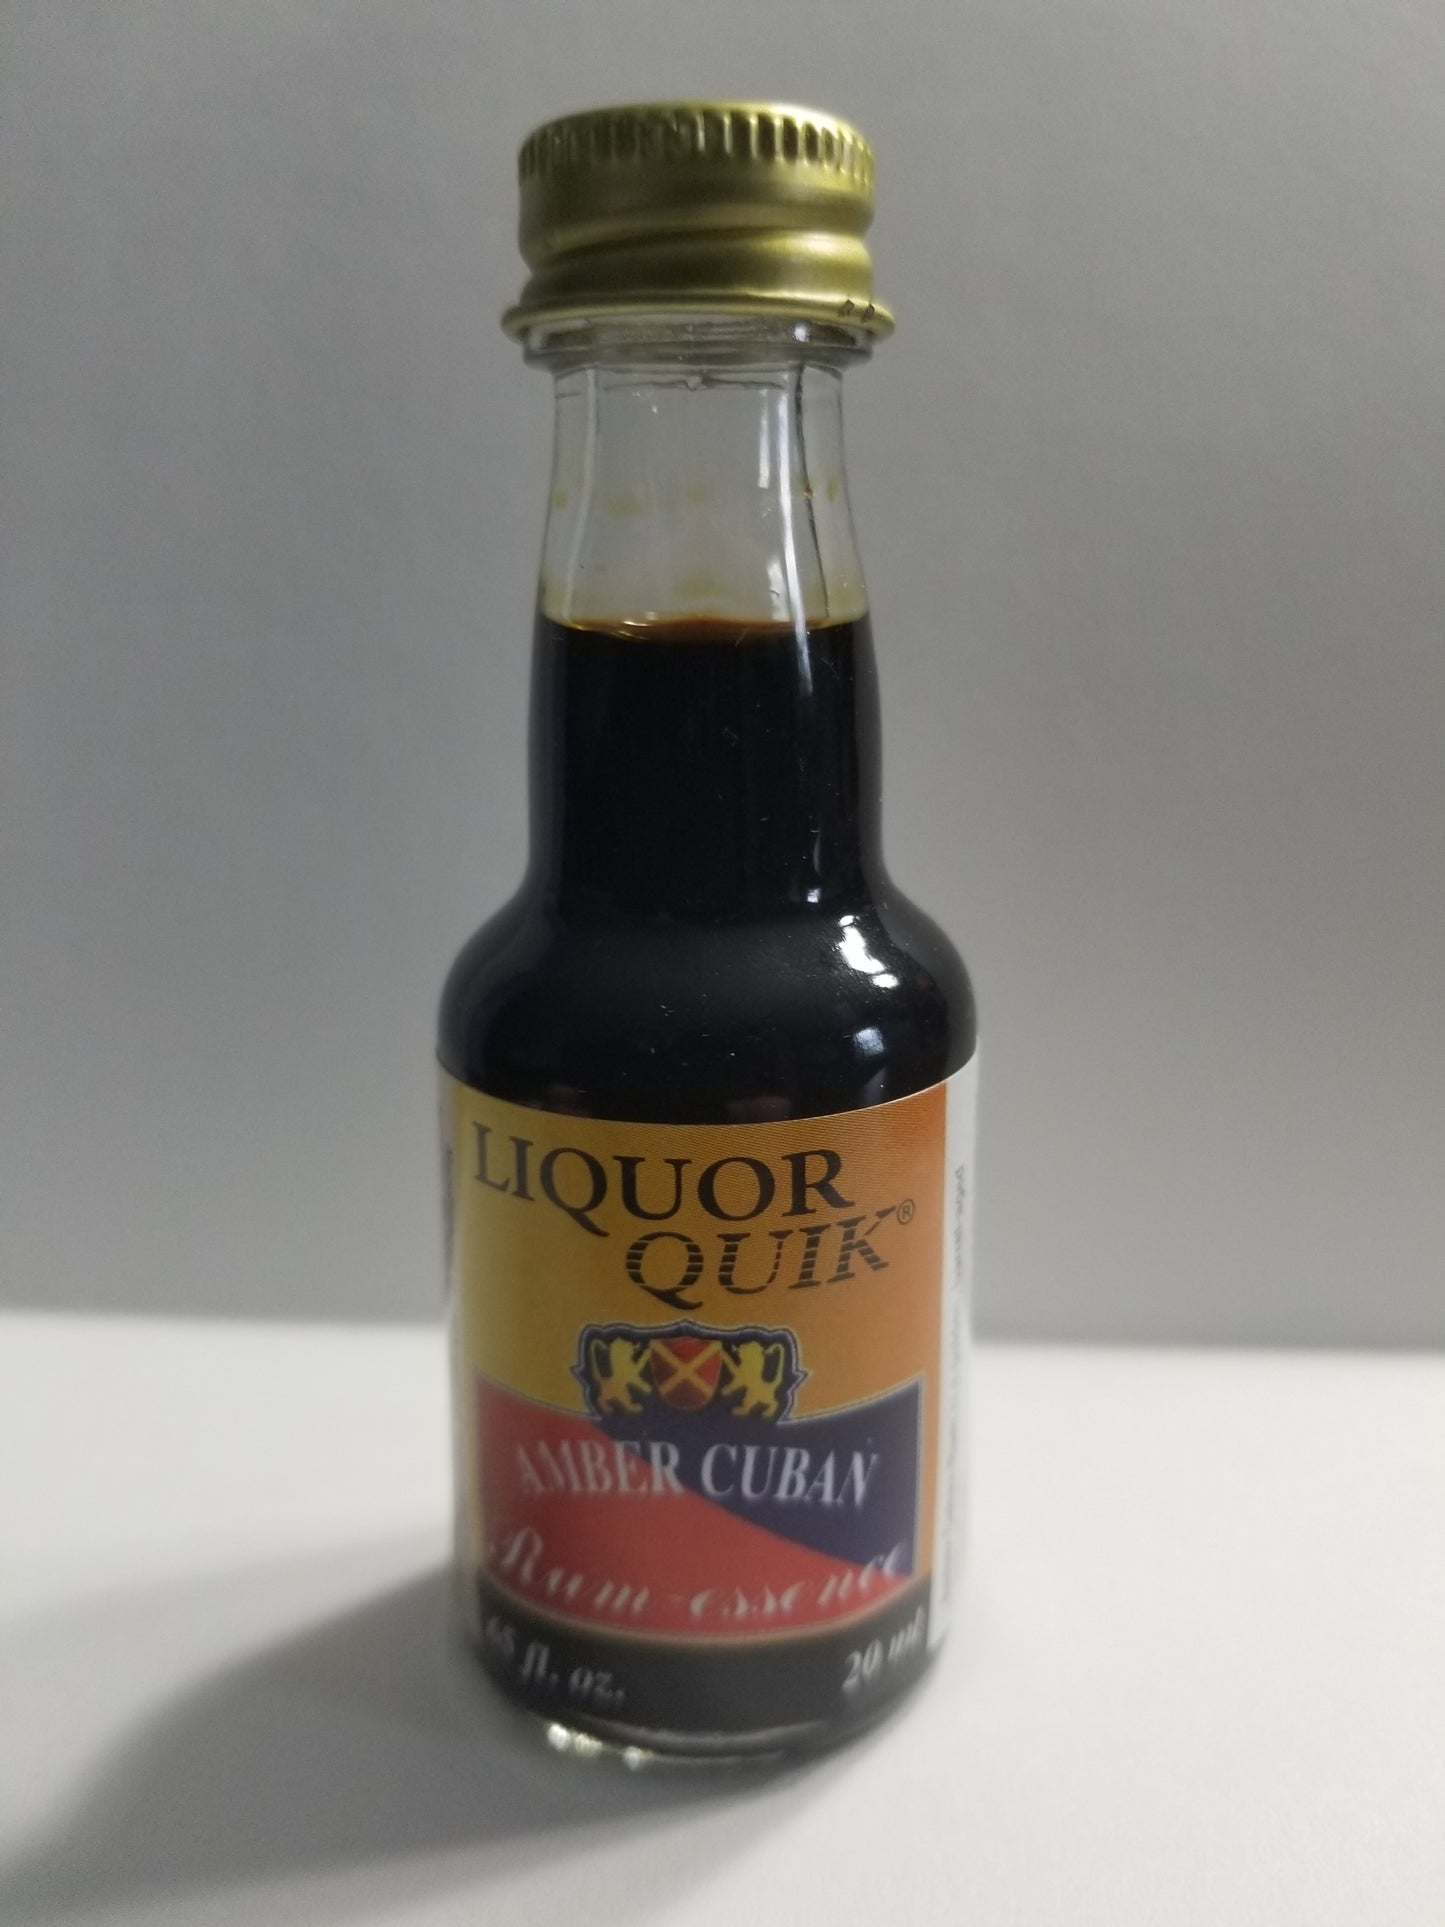 Amber Cuban Rum Essence